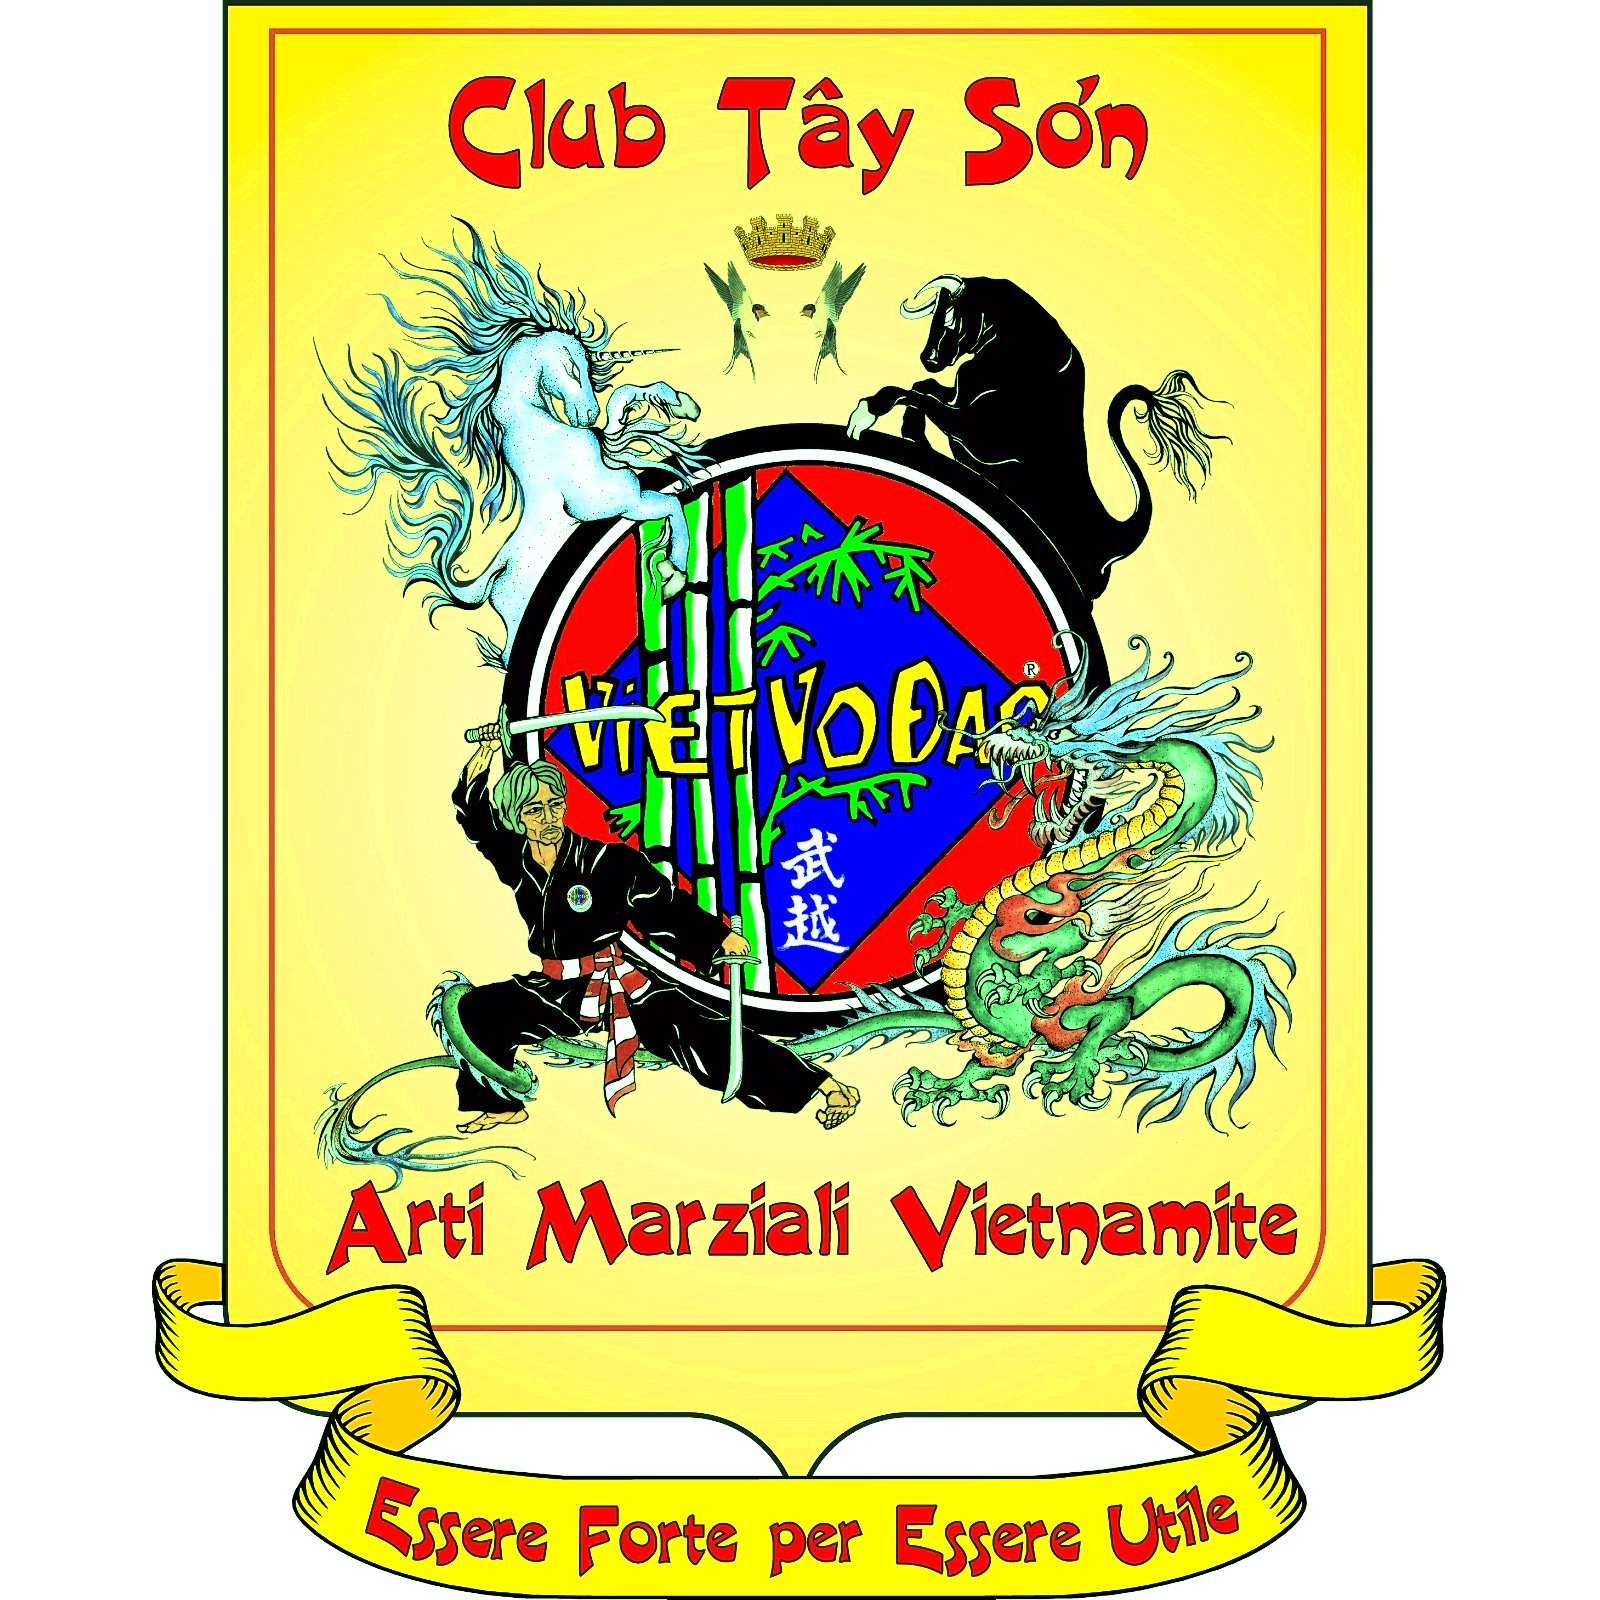 Associazione Sportiva Dilettantistica Viet Vo Dao Club Tay Son